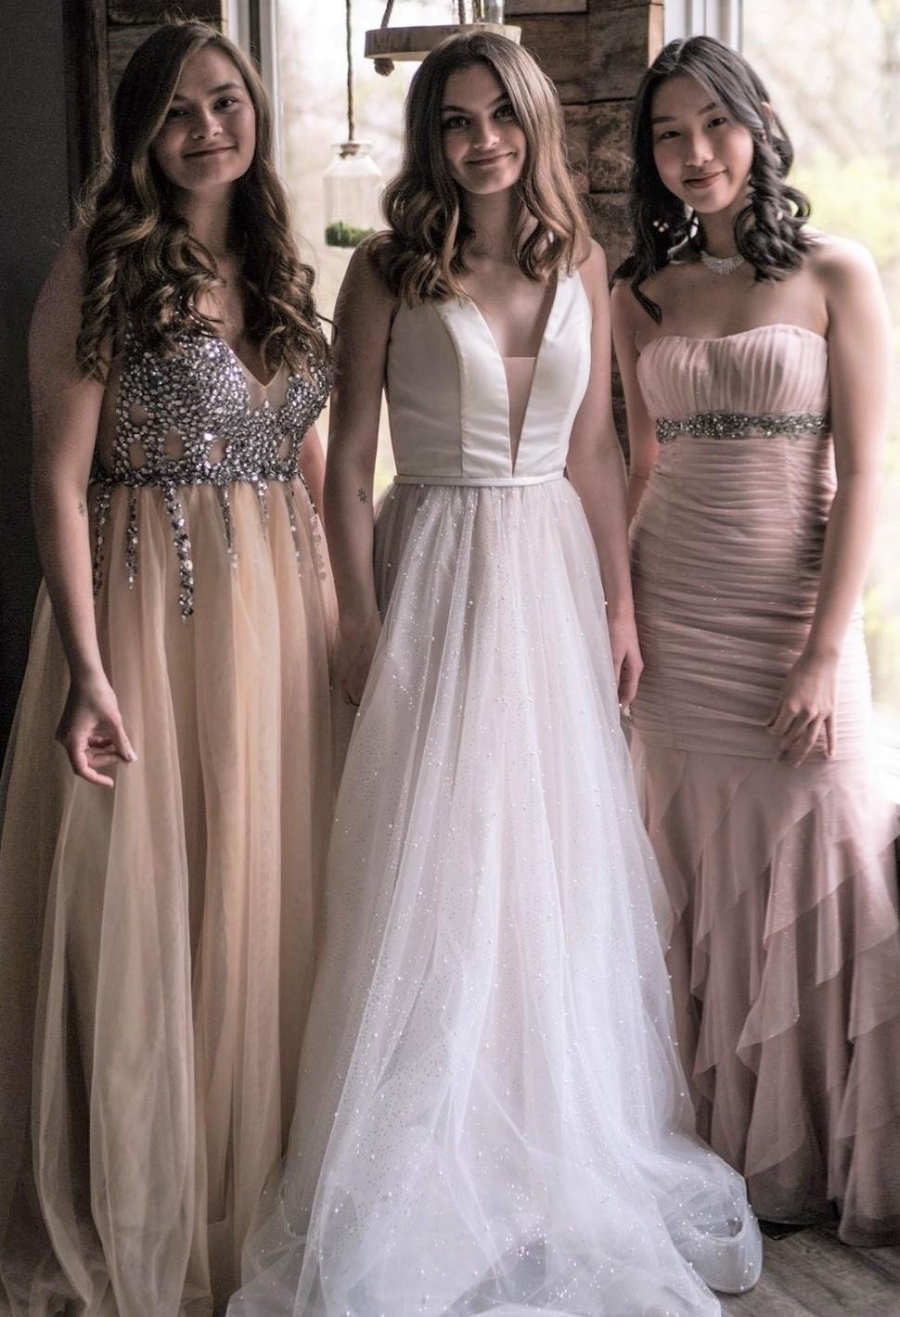 girls wearing prom dresses